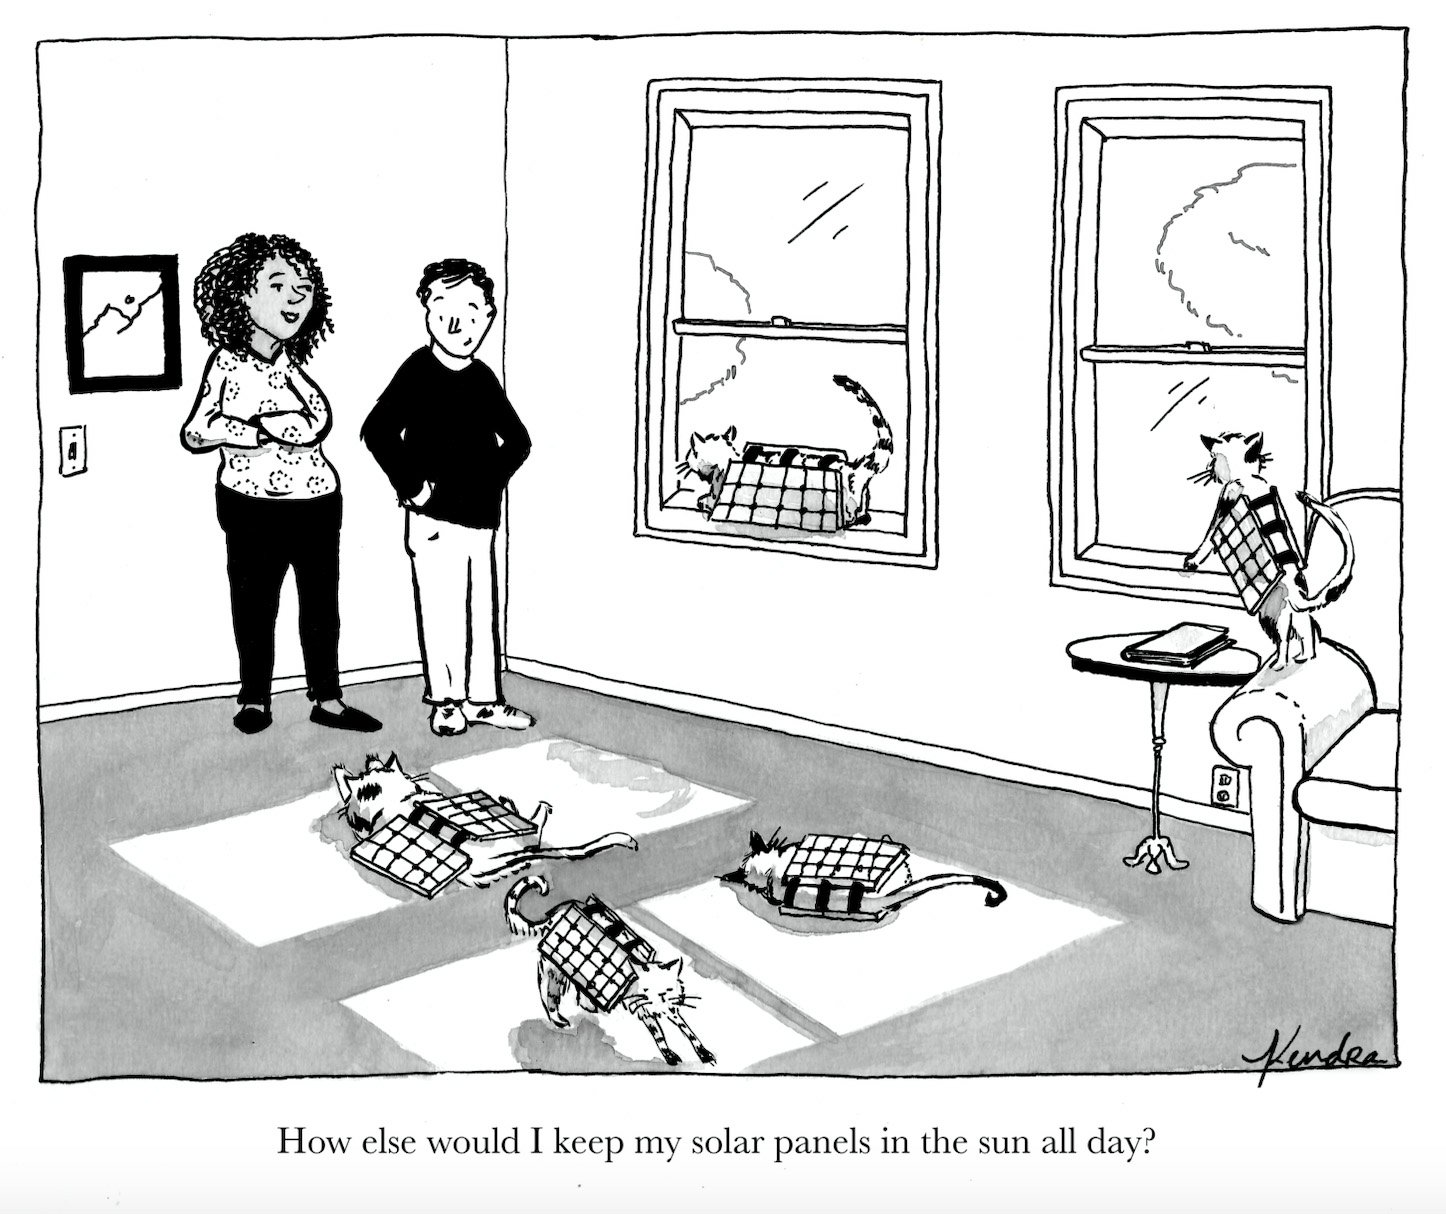 New Yorker Cartoon cats keep solar panels in the sun all day.jpeg